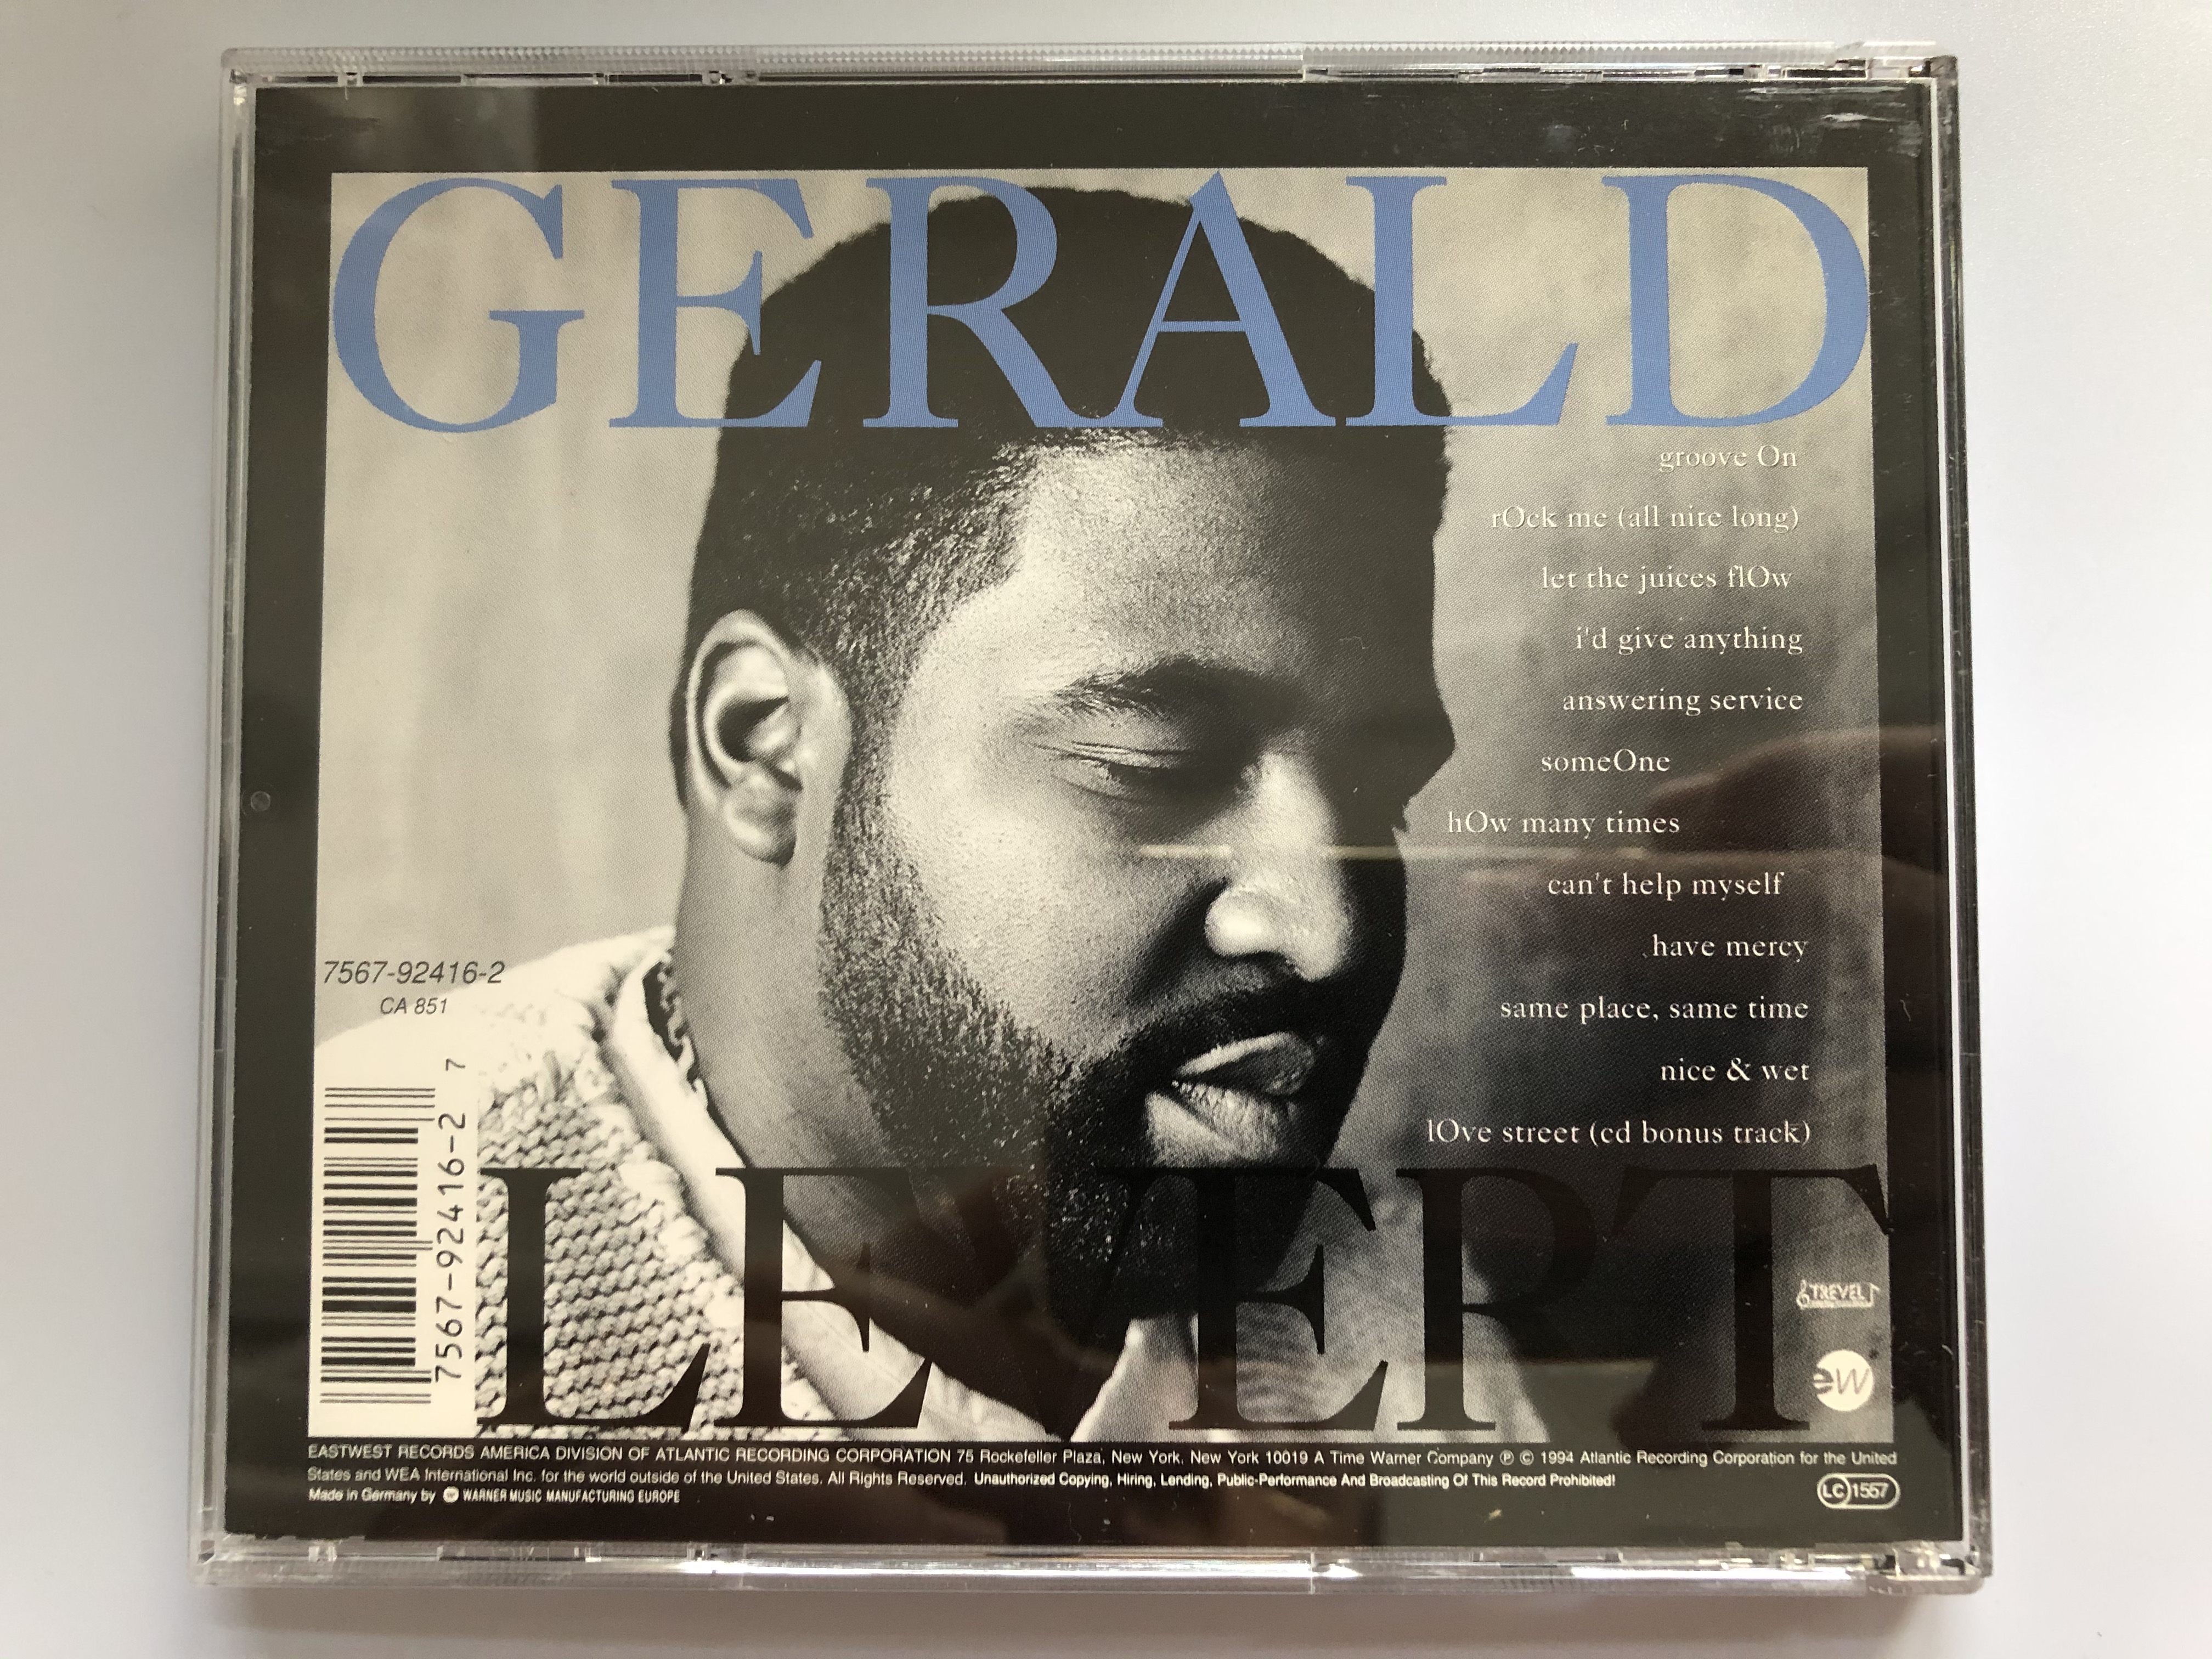 gerald-levert-groove-on-eastwest-records-america-audio-cd-1994-7567-92416-2-4-.jpg